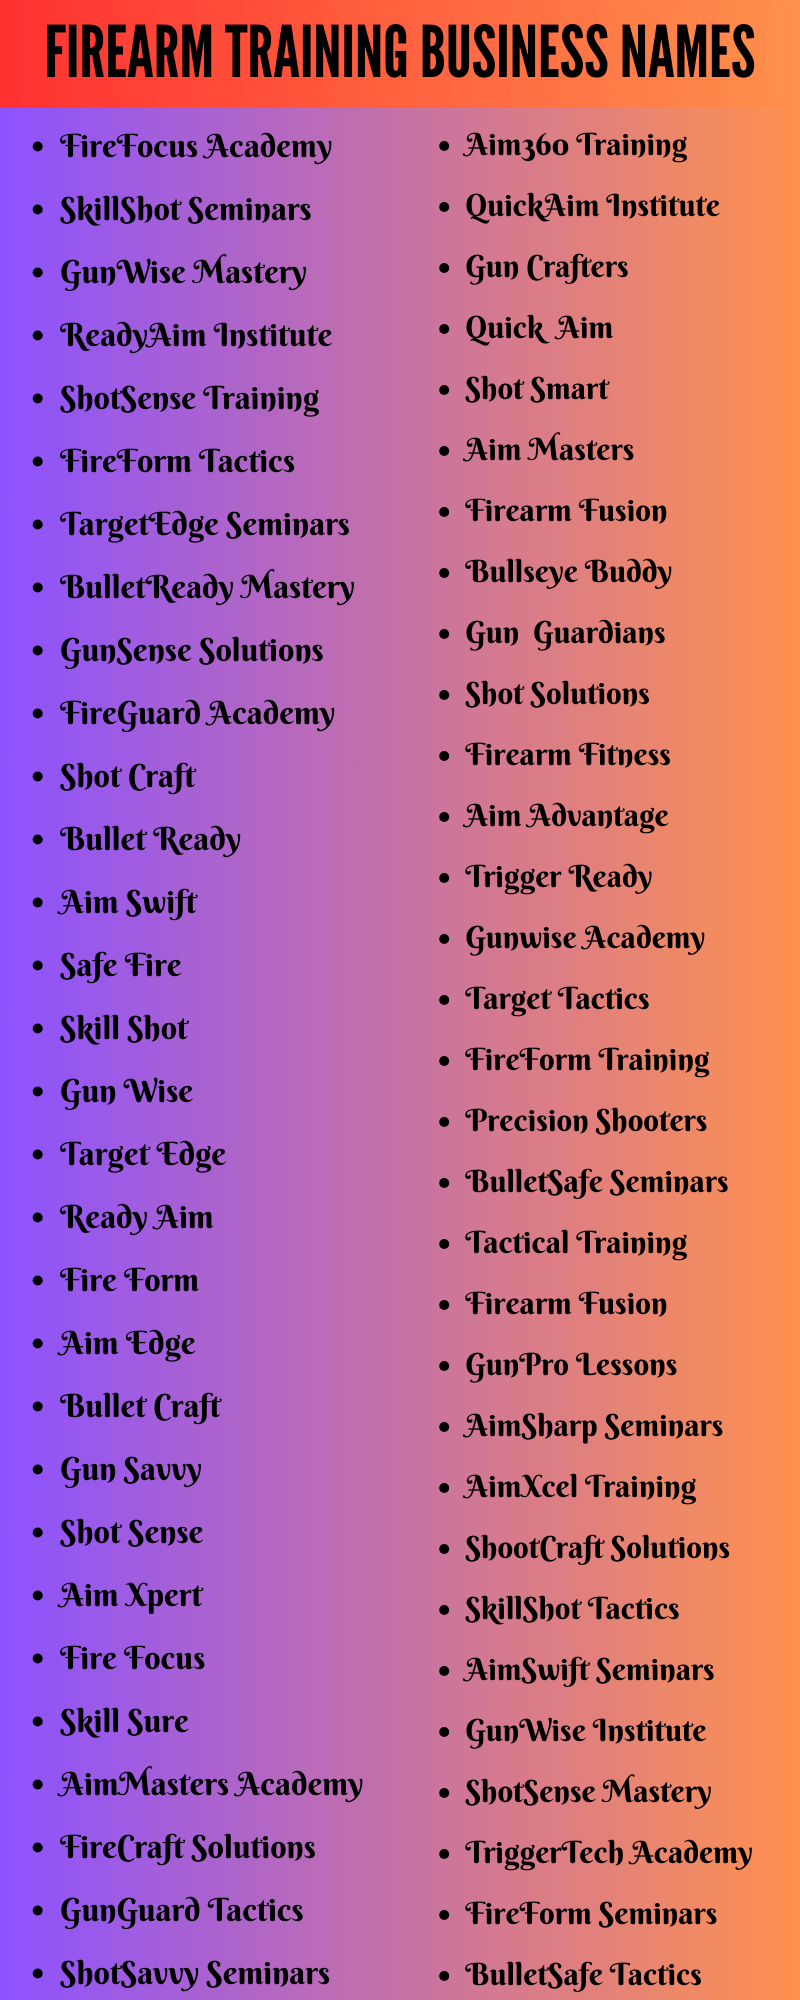 Firearm Training Business Names